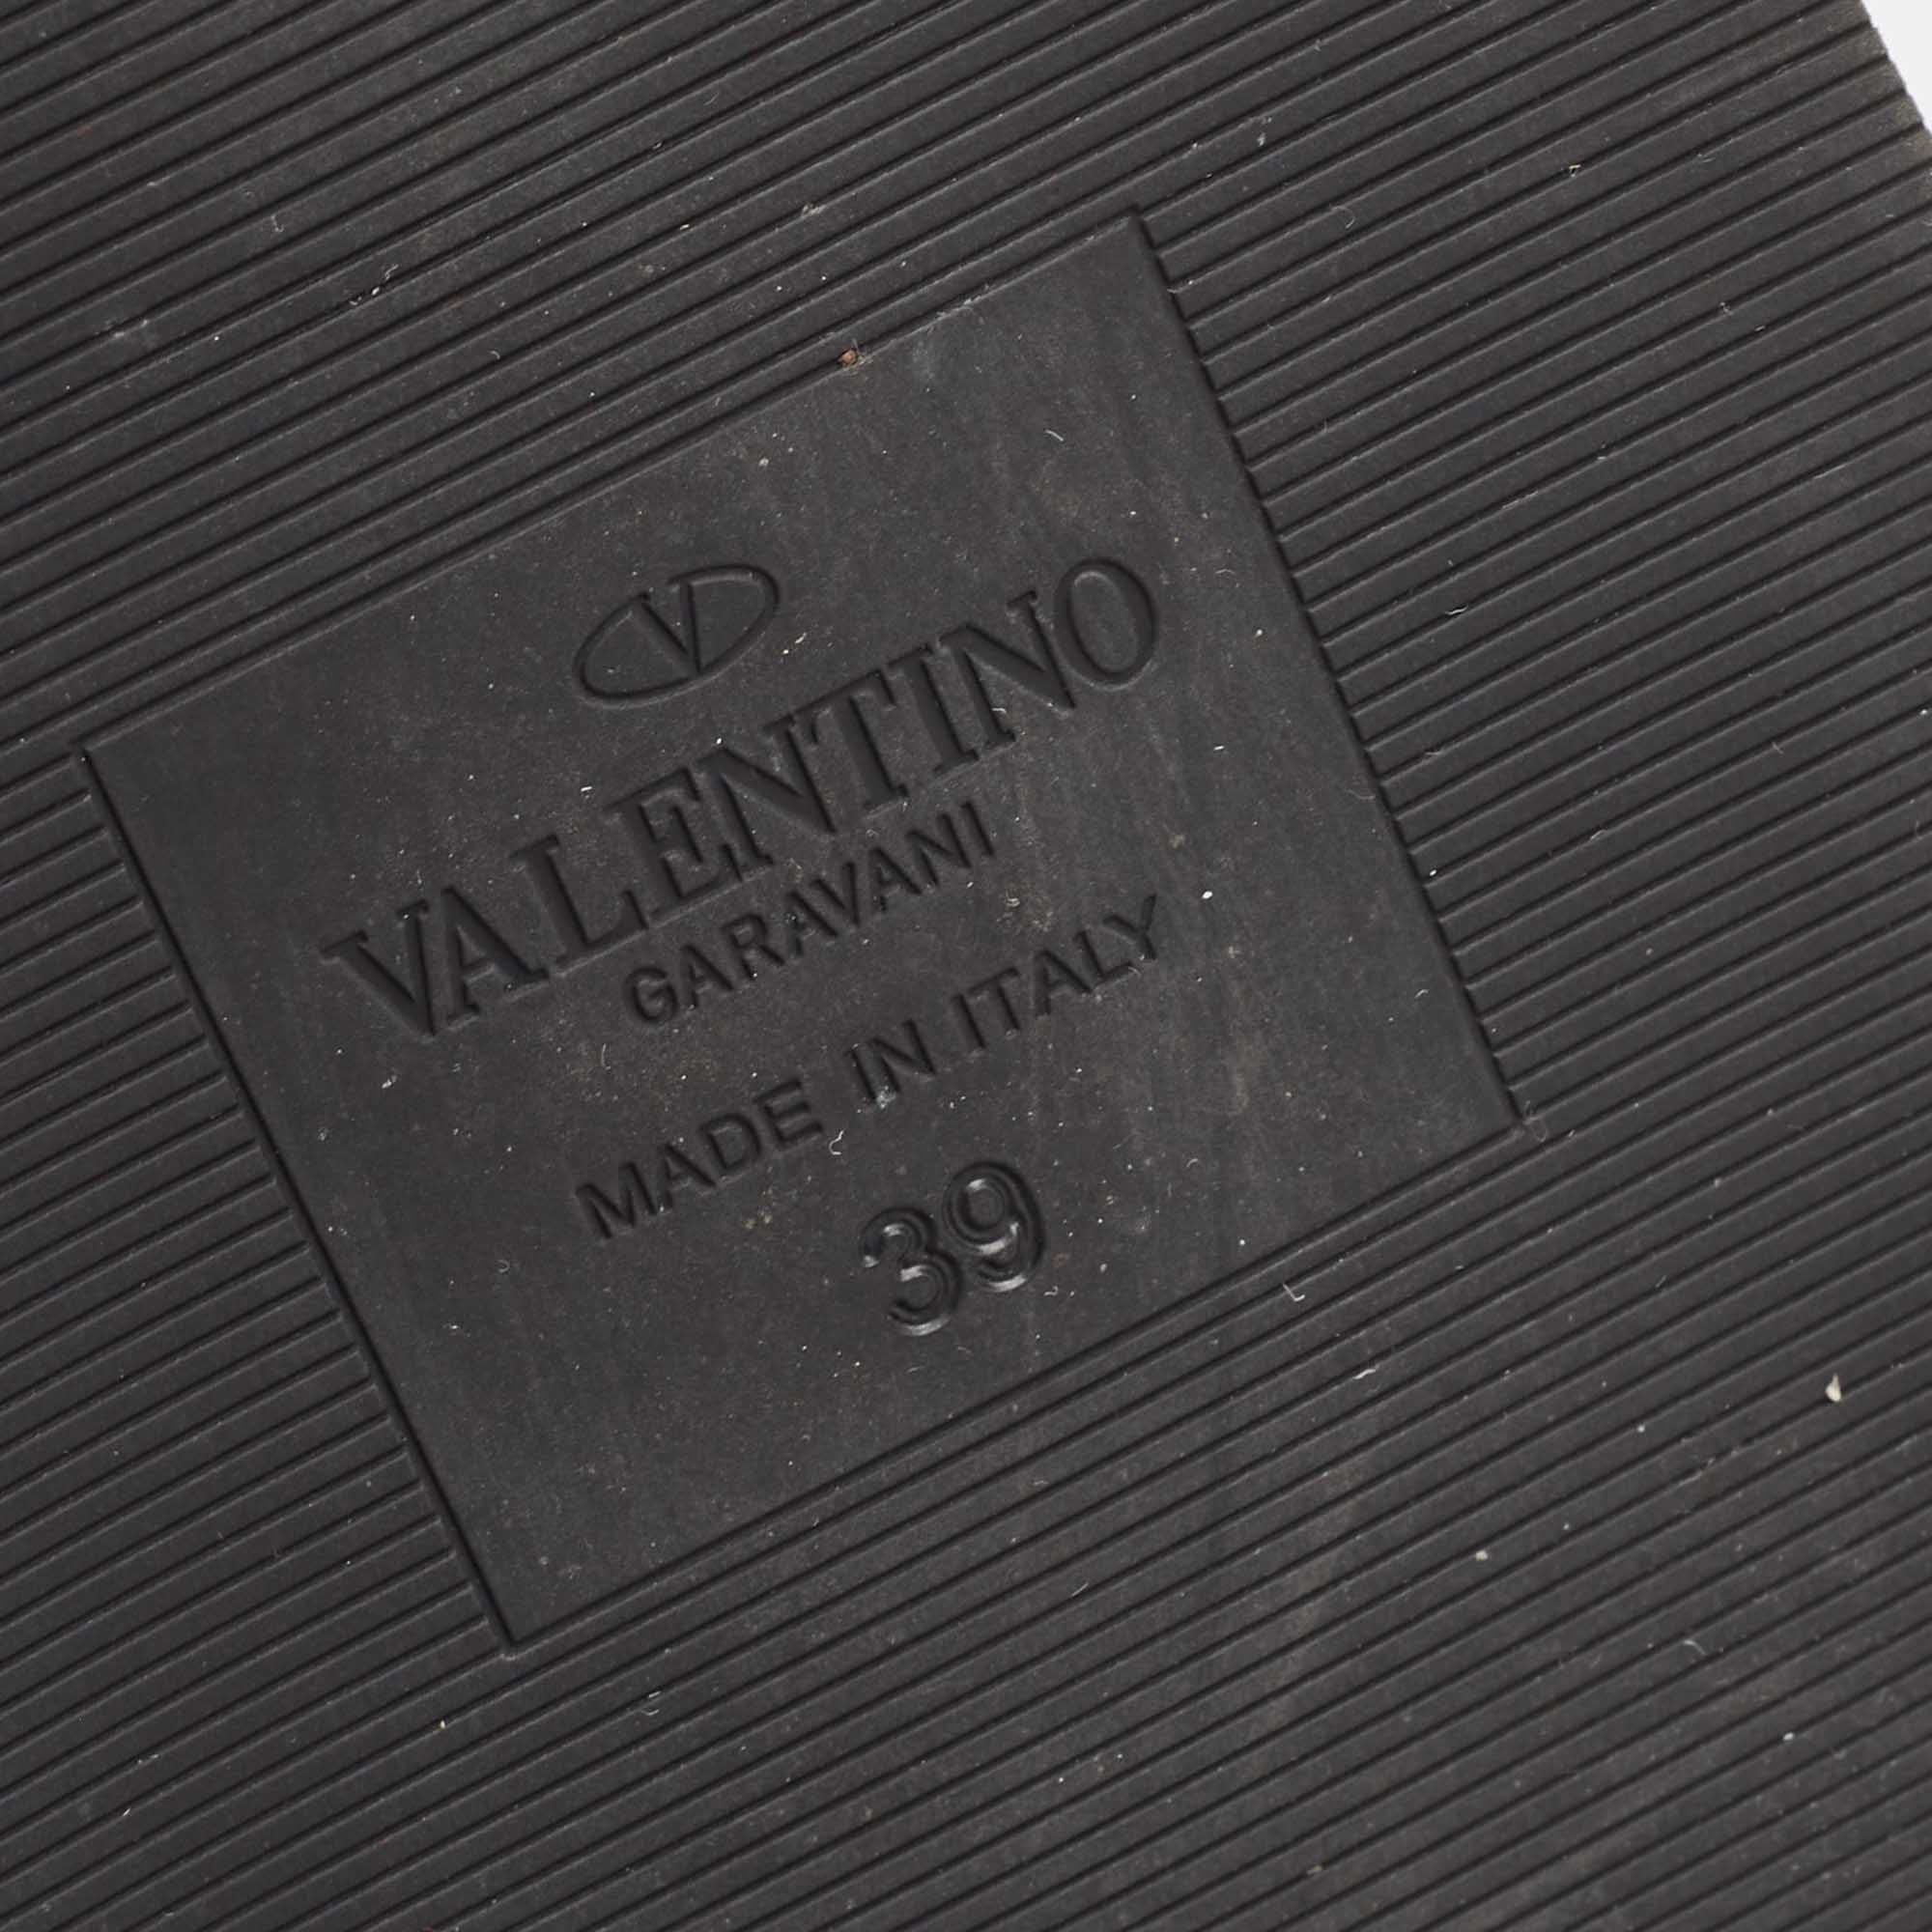 Valentino Black Leather Rockstud Velcro Slingback Flat Sandals Size 39